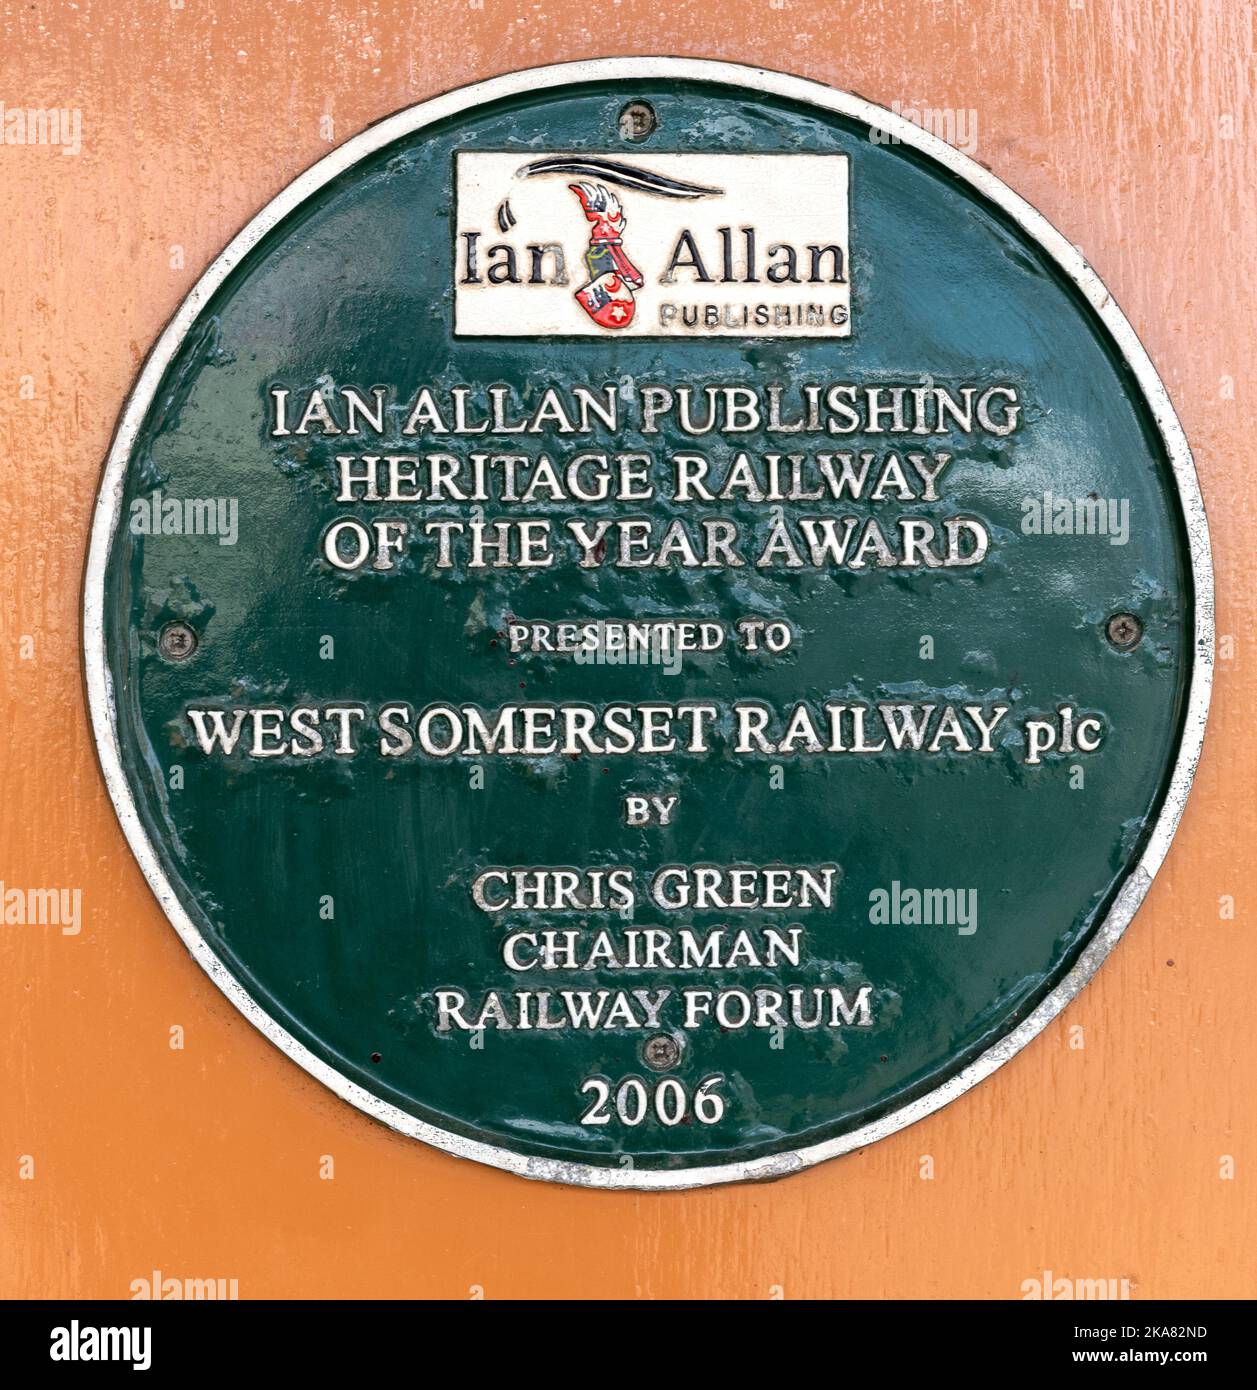 Ian Allan Grüne Plakette am Bahnhof Minehead, West Somerset Preservation Railway, Minehead, Somerset, England, Großbritannien Stockfoto